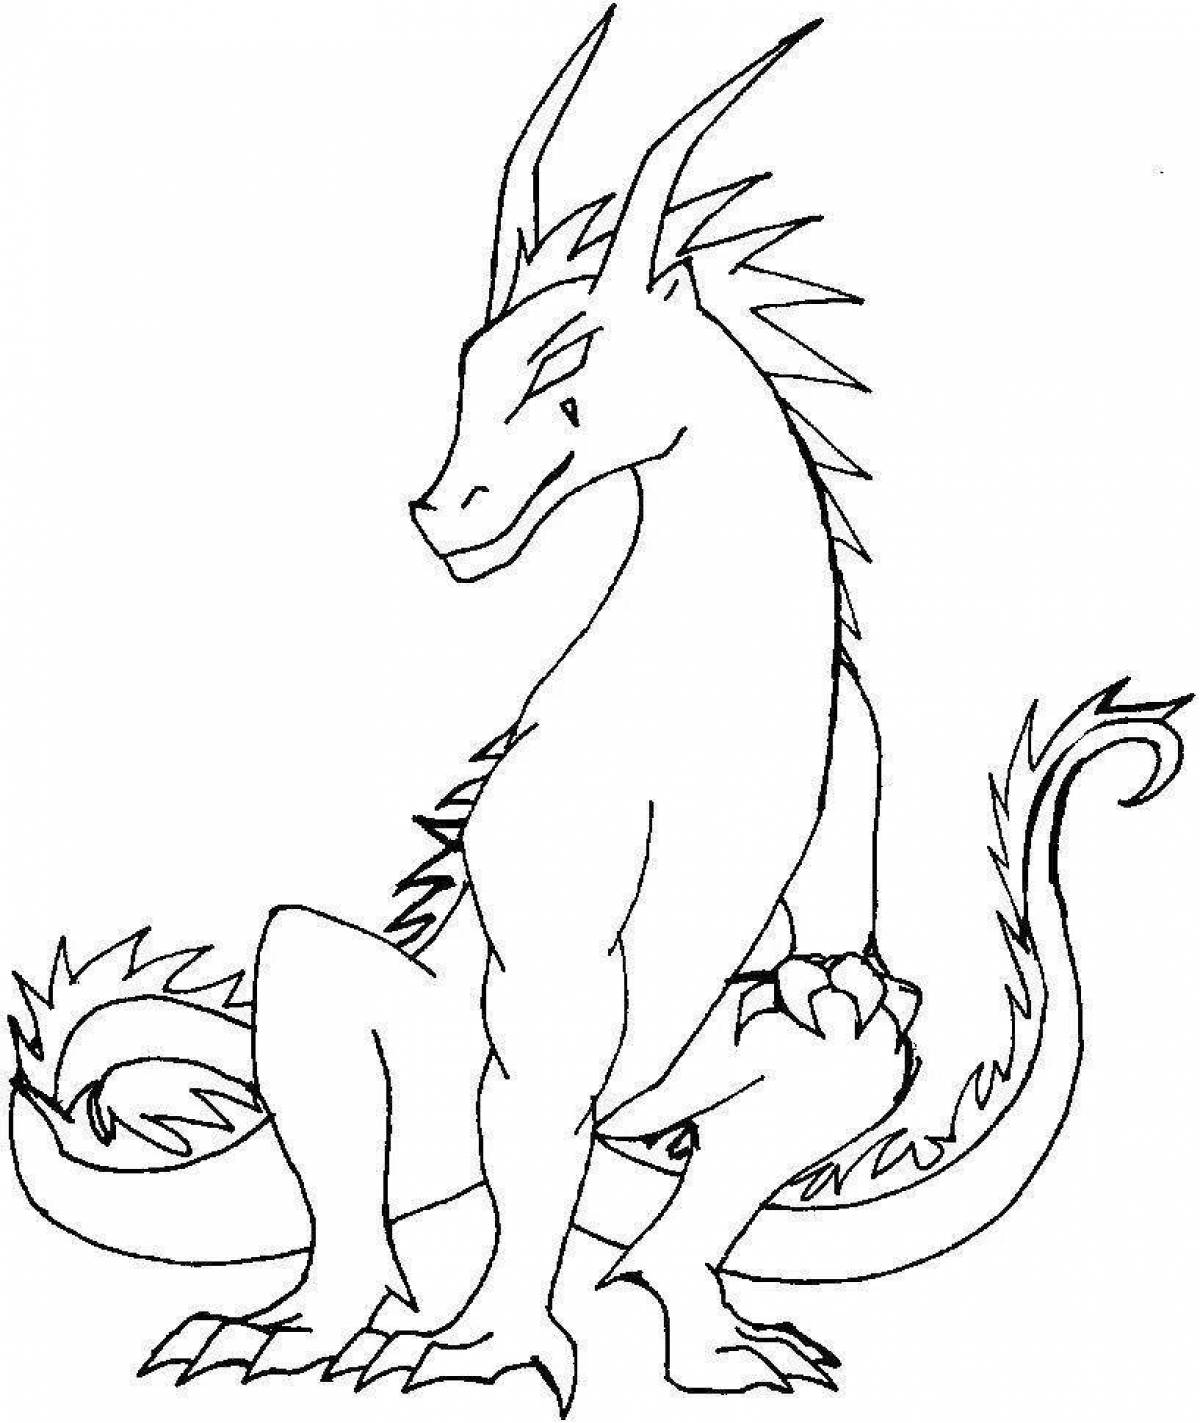 Exuberant coloring page dragon figure